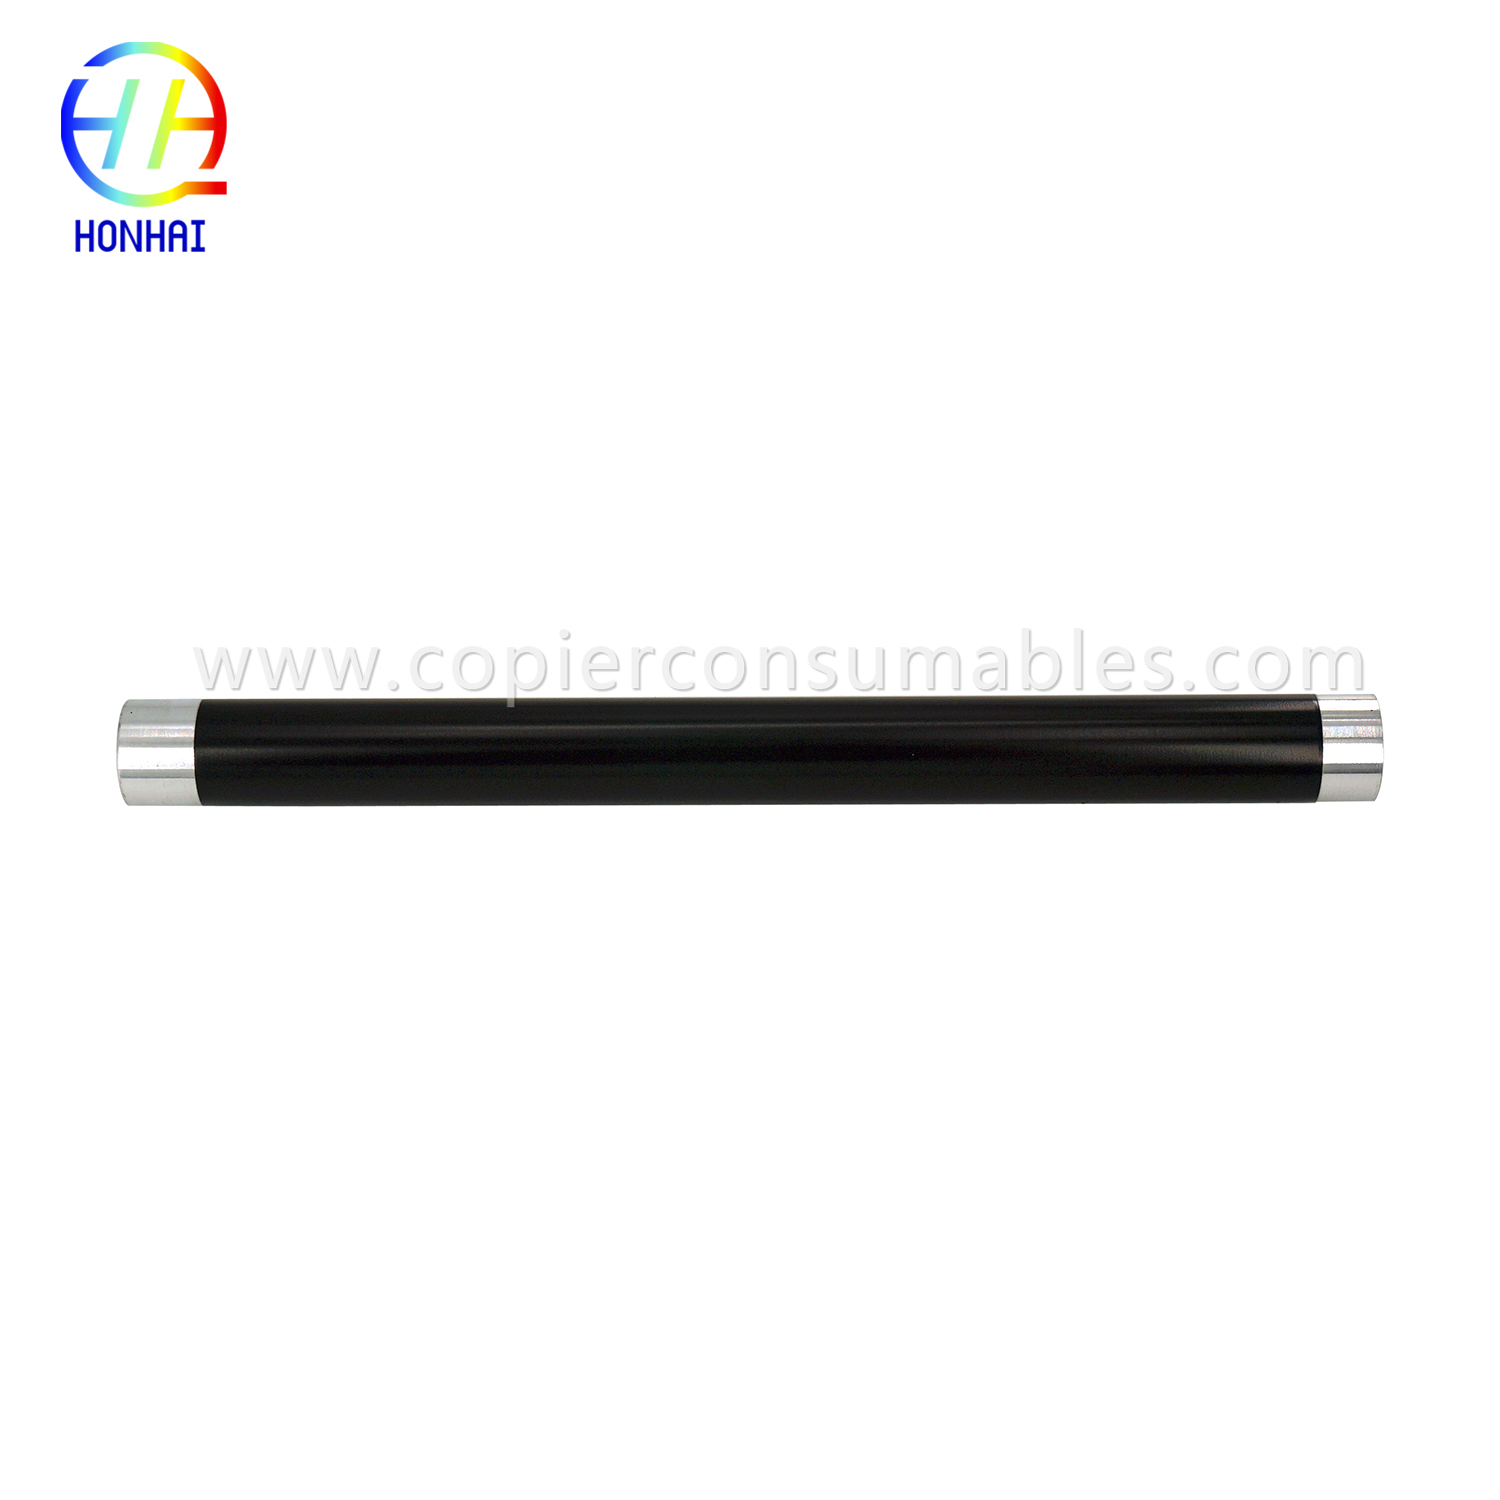 Lower Pressure Roller for Kyocera Fs1300 1028 1128 1110 1024 1124 KM2820 (3)